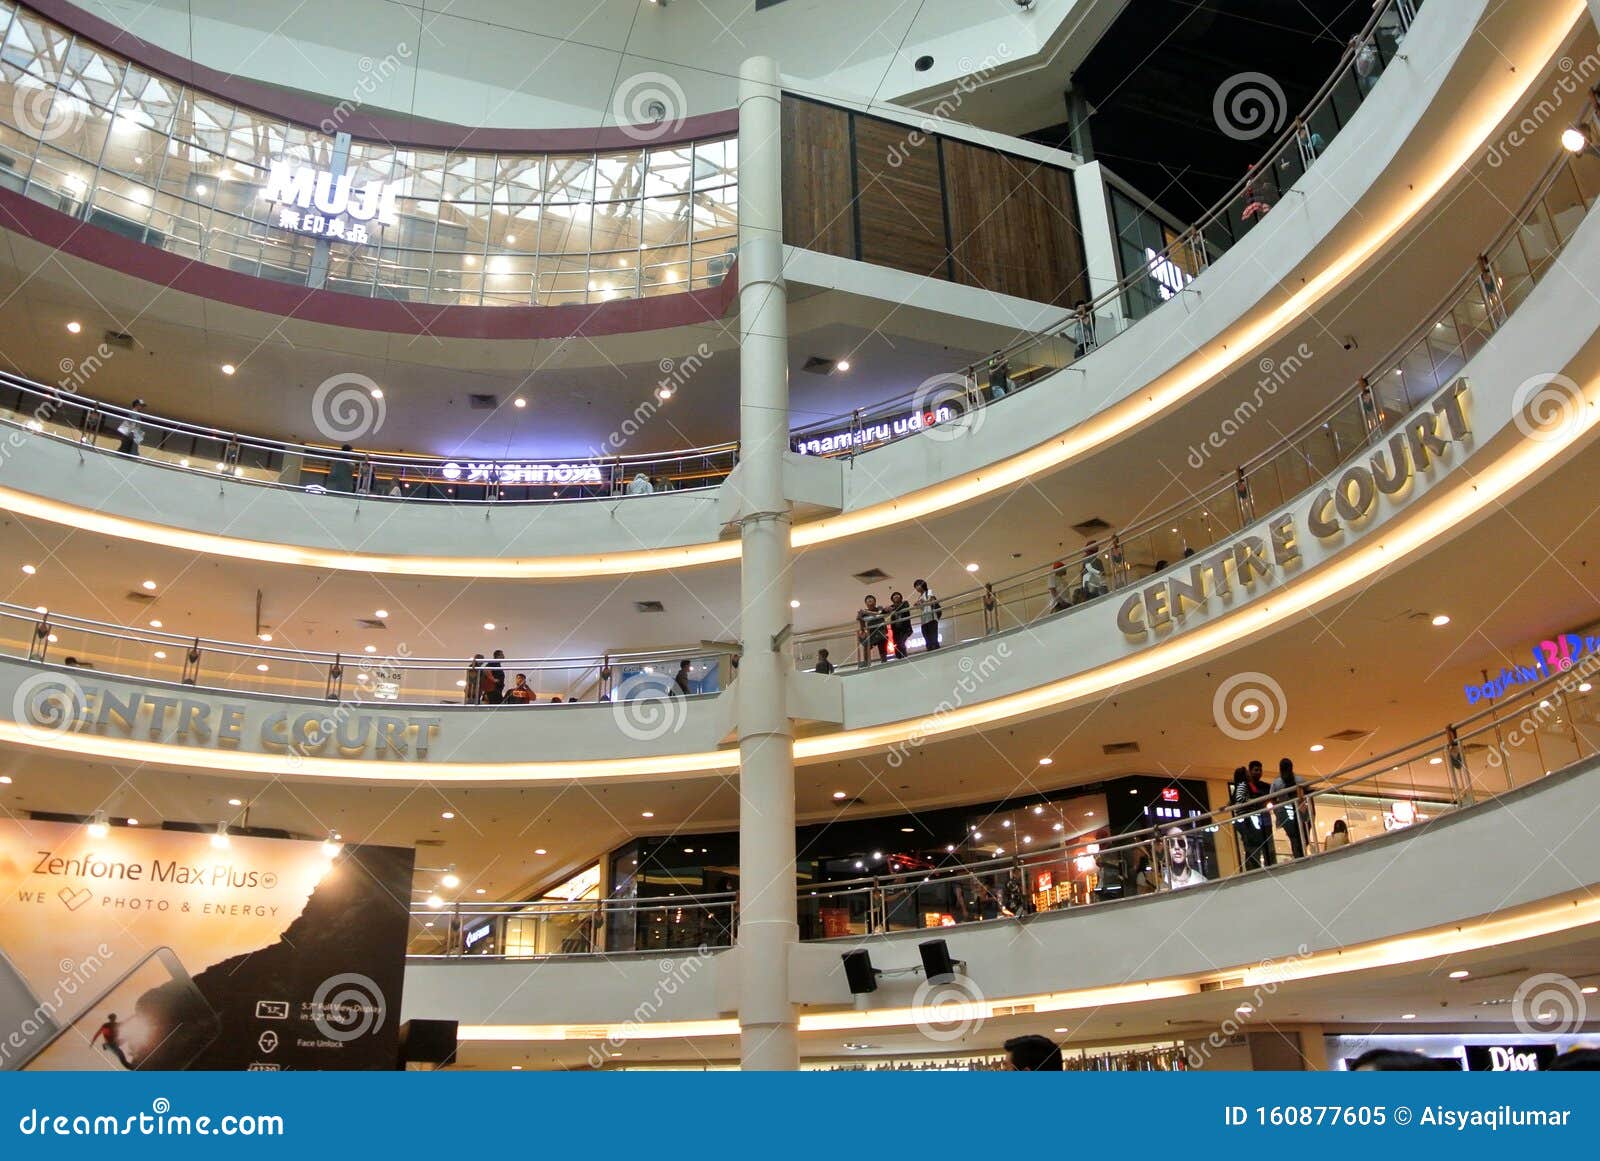 Mid Valley Megamall Shopping Mall Main Atrium. Editorial